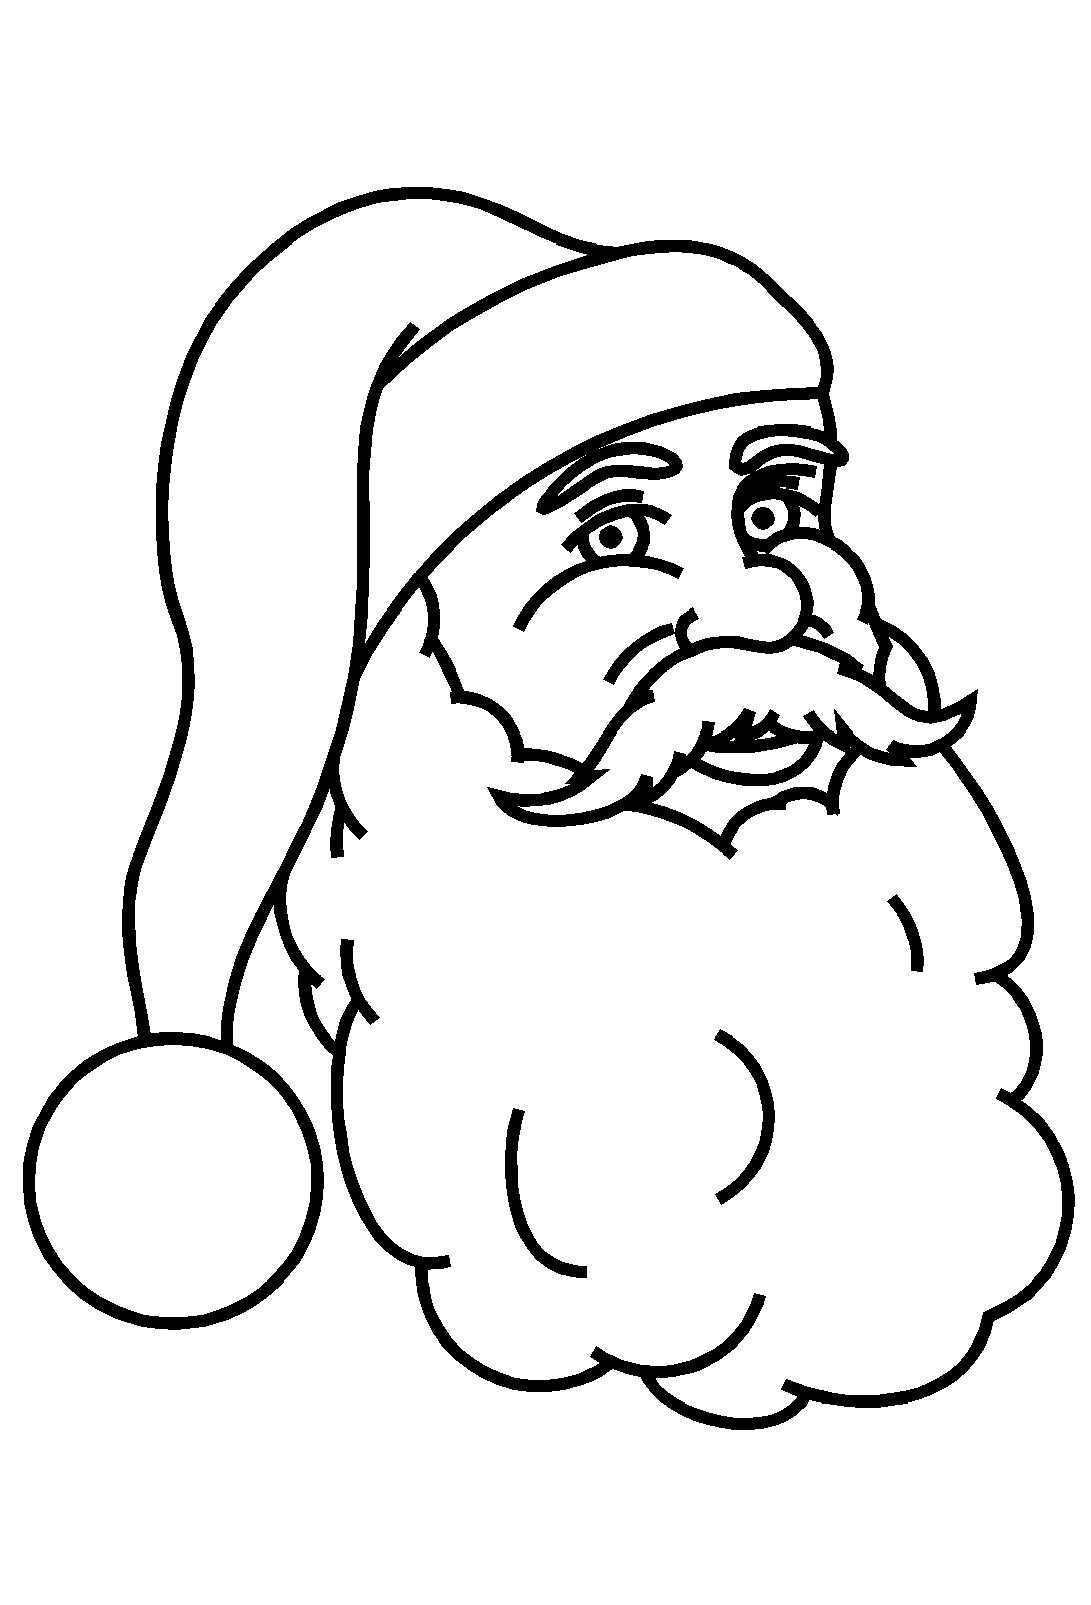 Barbe de Père Noël à imprimer  Pere noel a imprimer, Barbe père